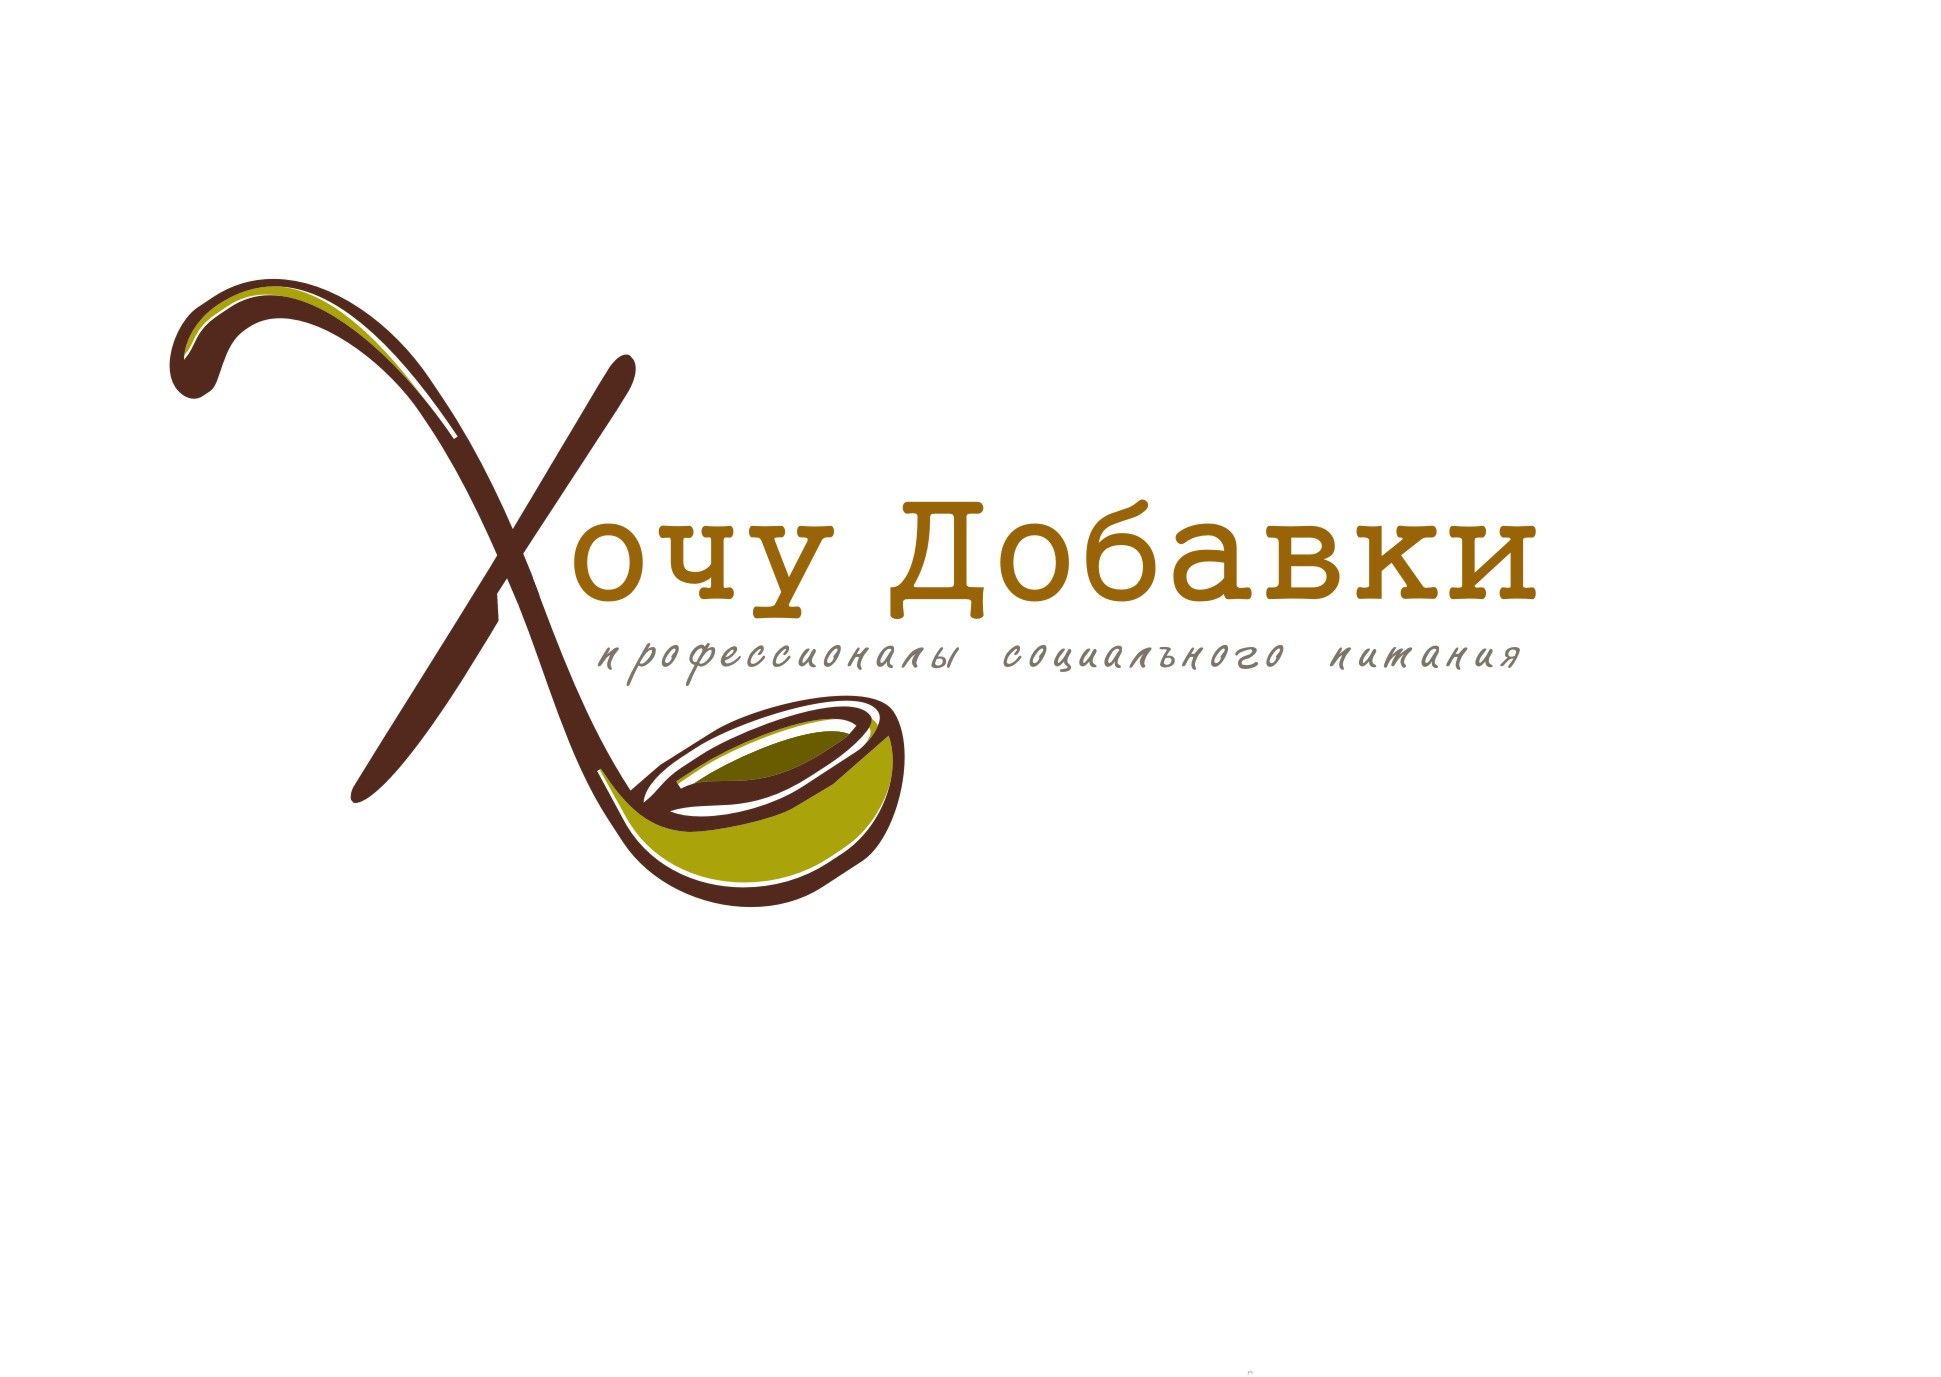 Логотип для ХочуDобавки (коротко - XD) - дизайнер Minico